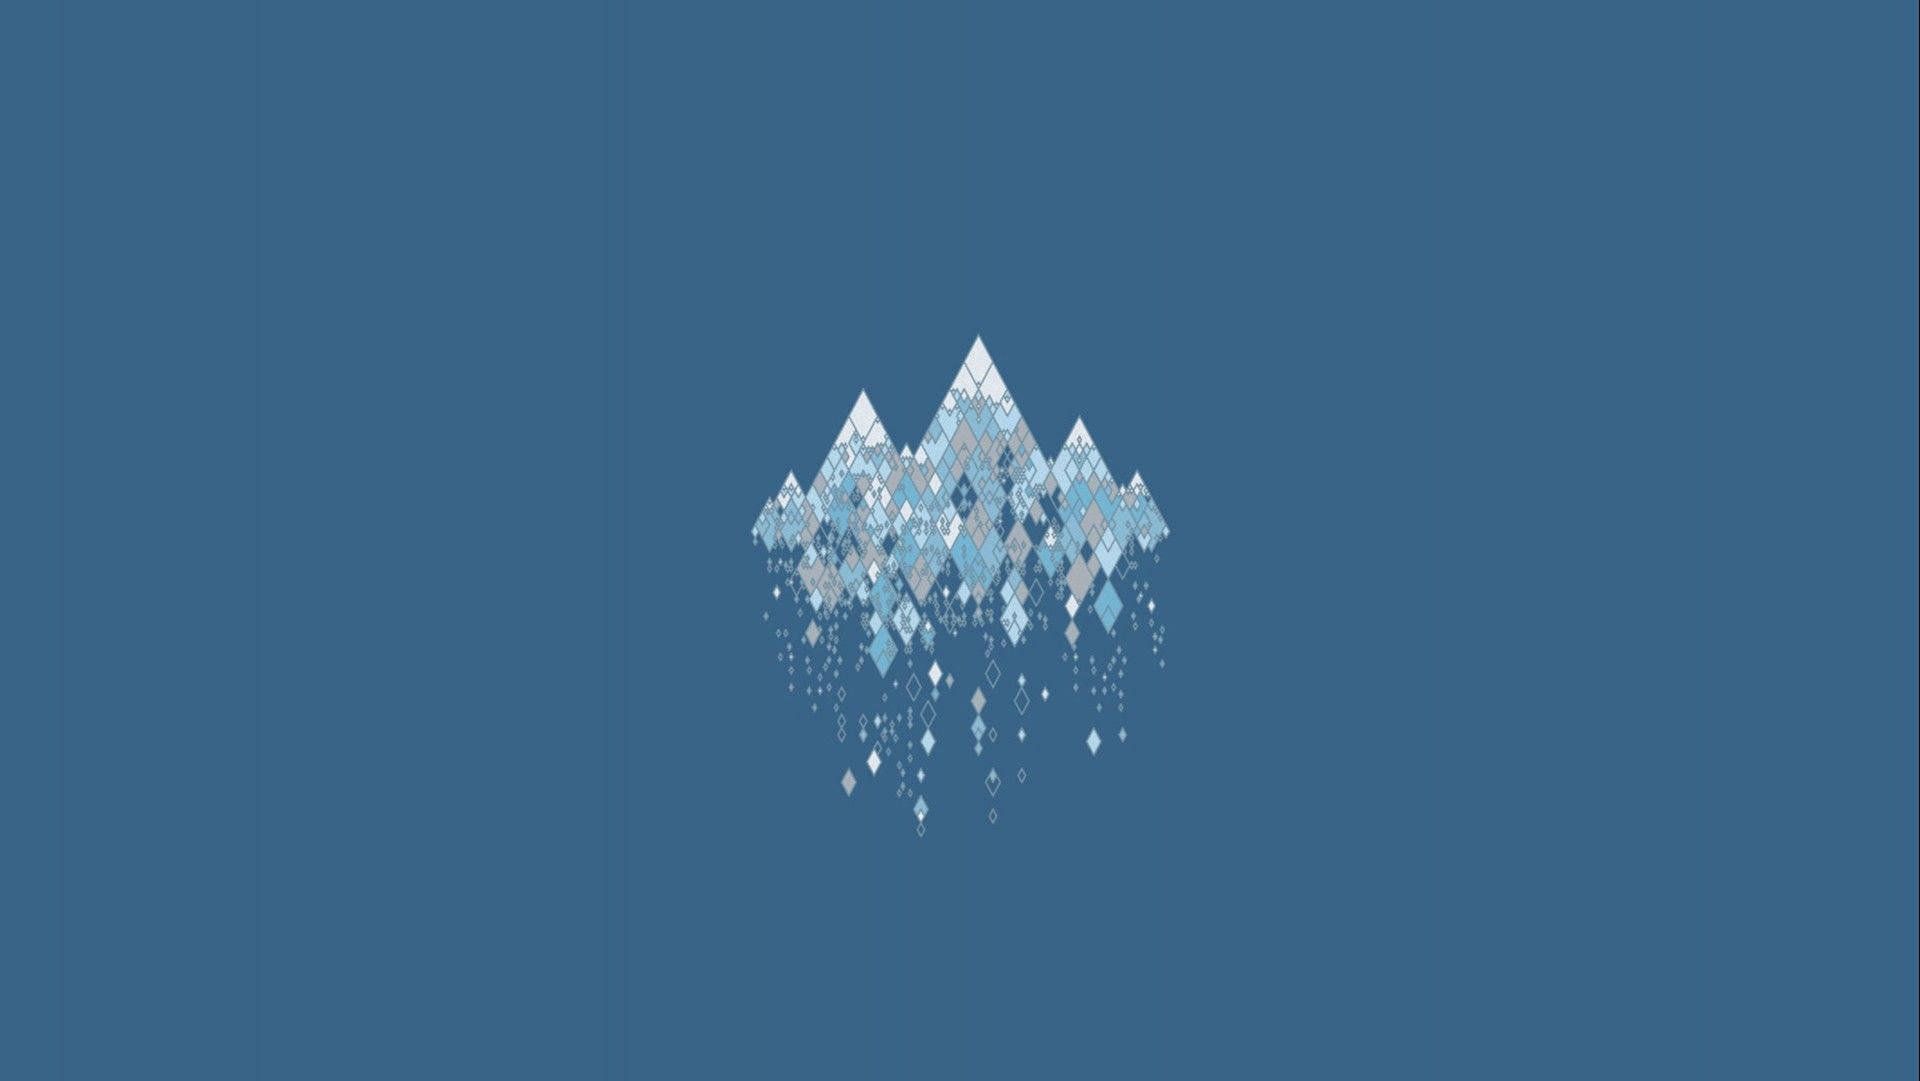 Simple Crystal Design Background